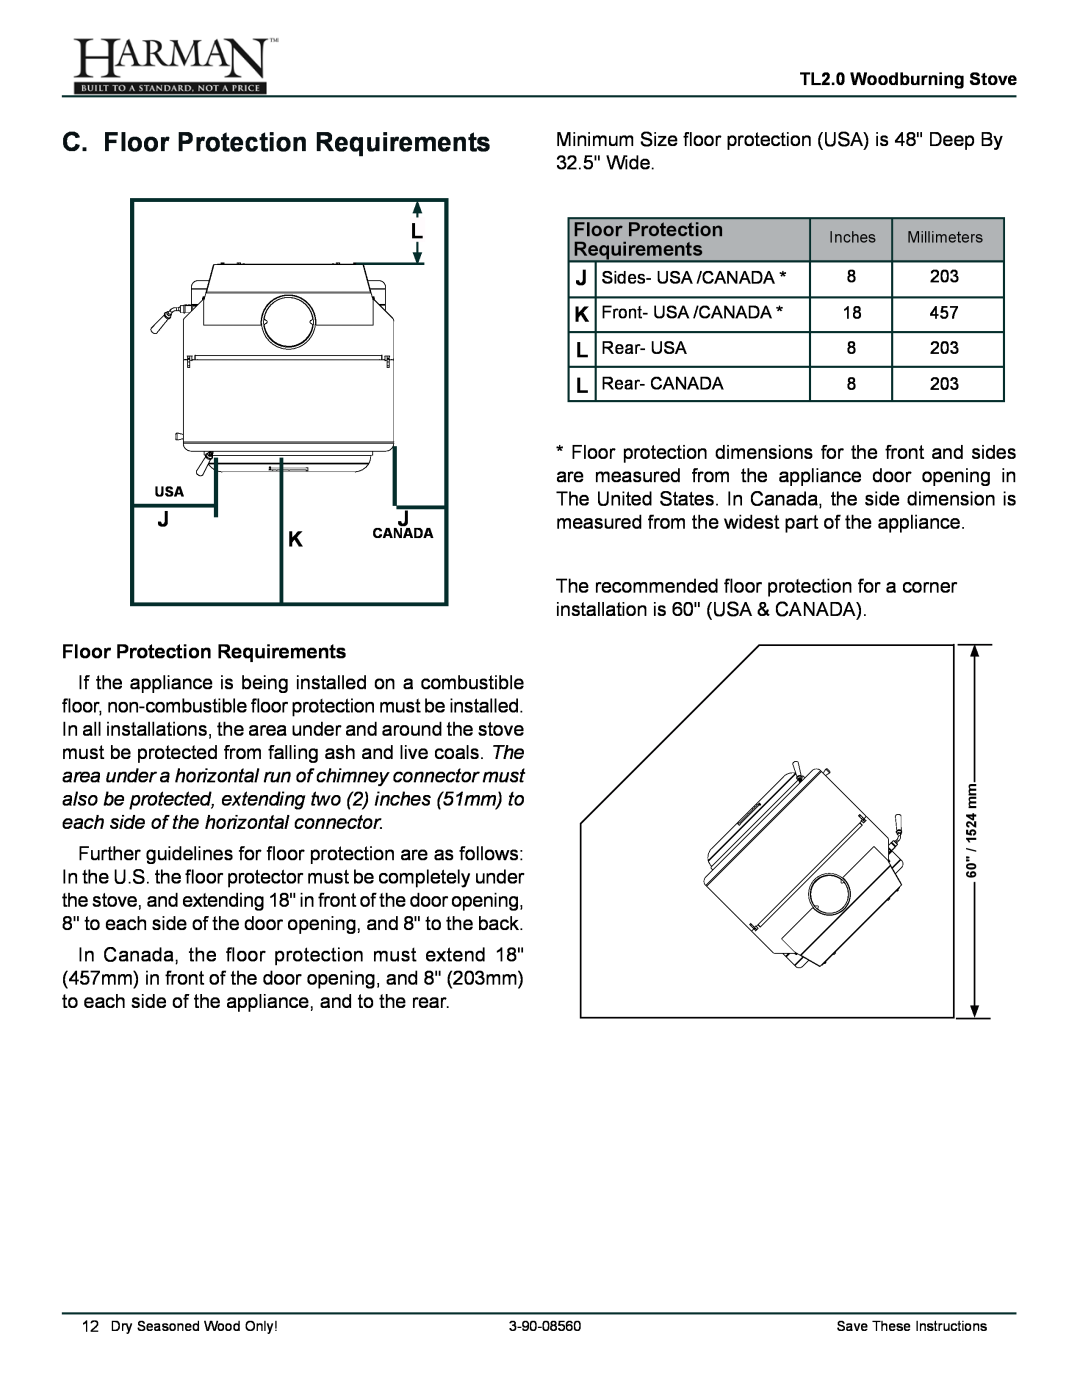 Harman Stove Company TL2.0 manual C. Floor Protection Requirements 